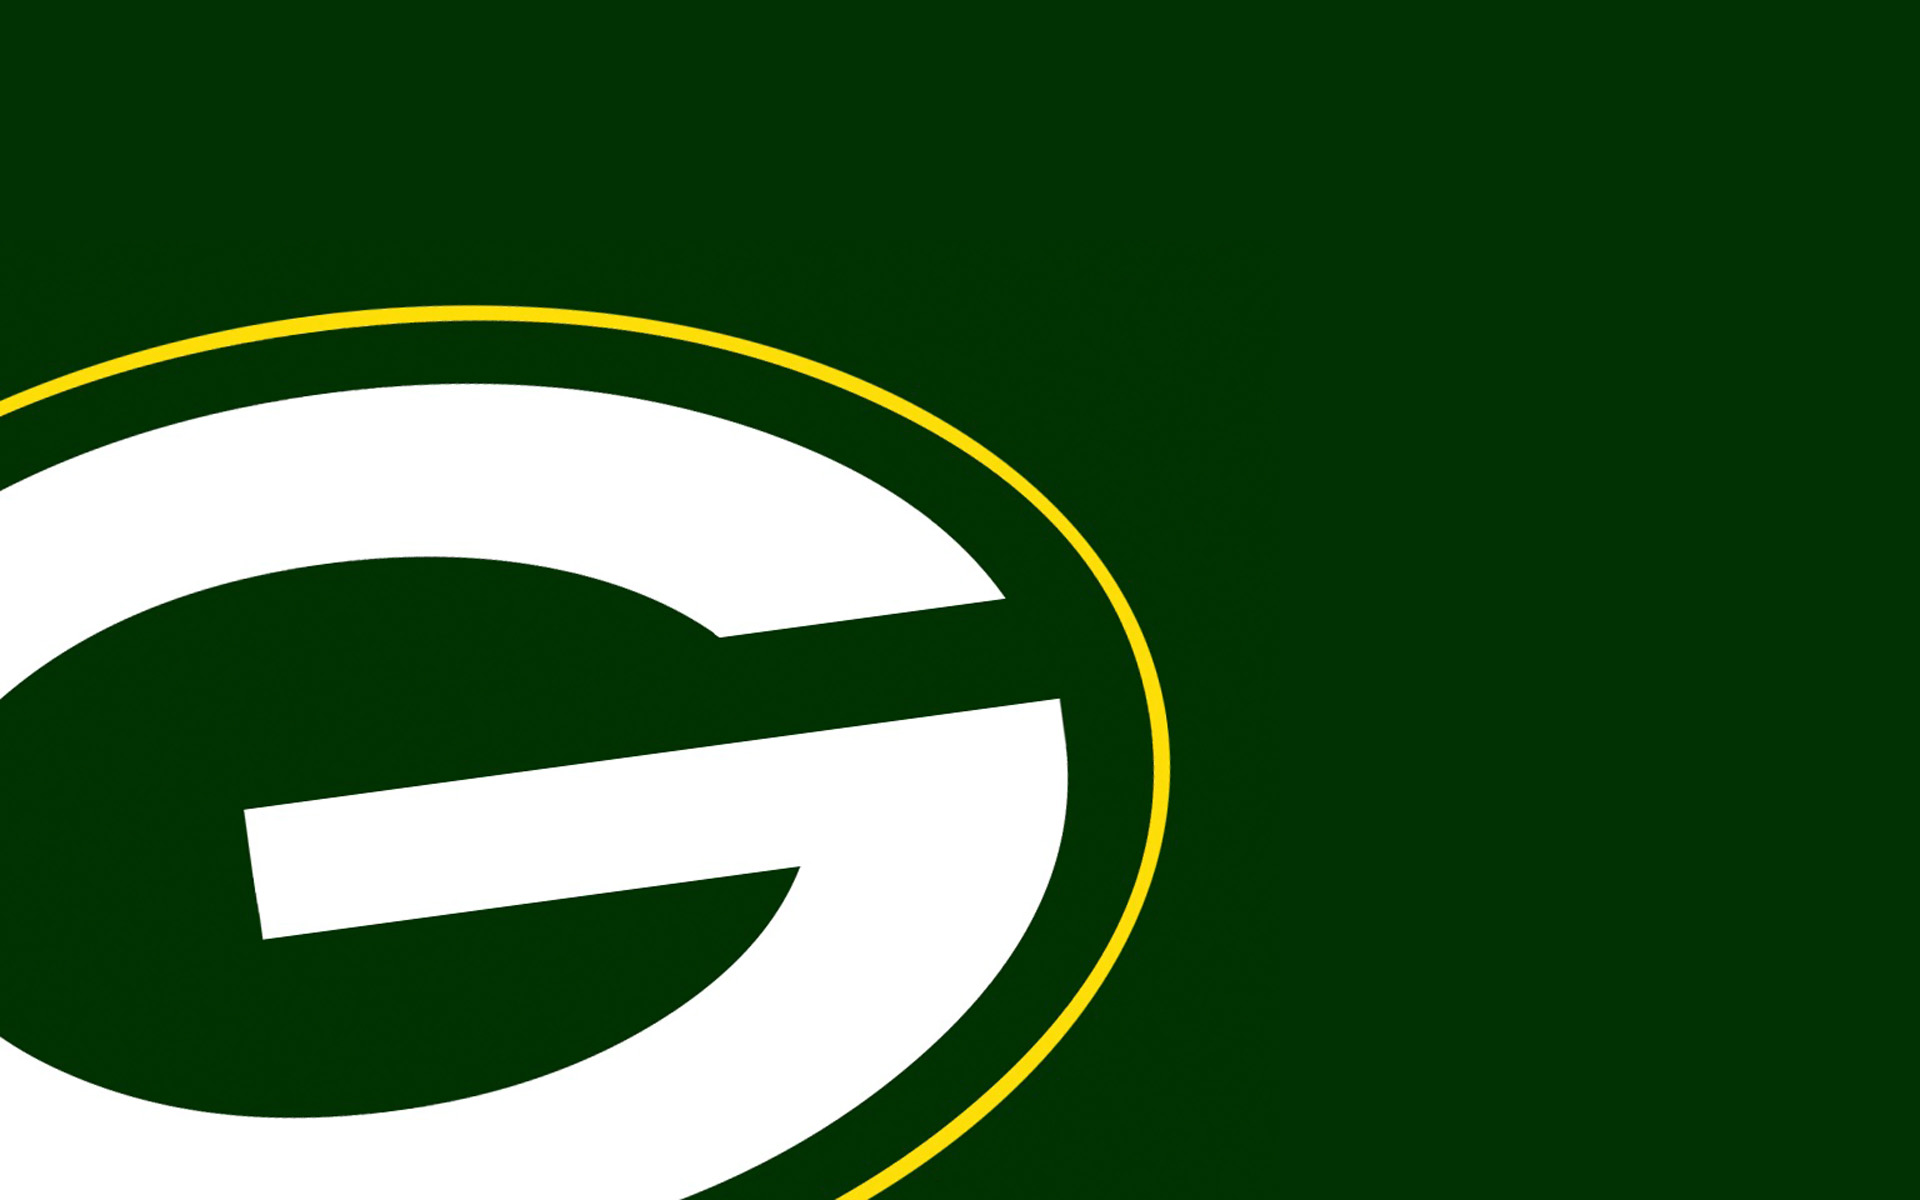 Free Green Bay Packers Desktop Image | Green Bay Packers ...